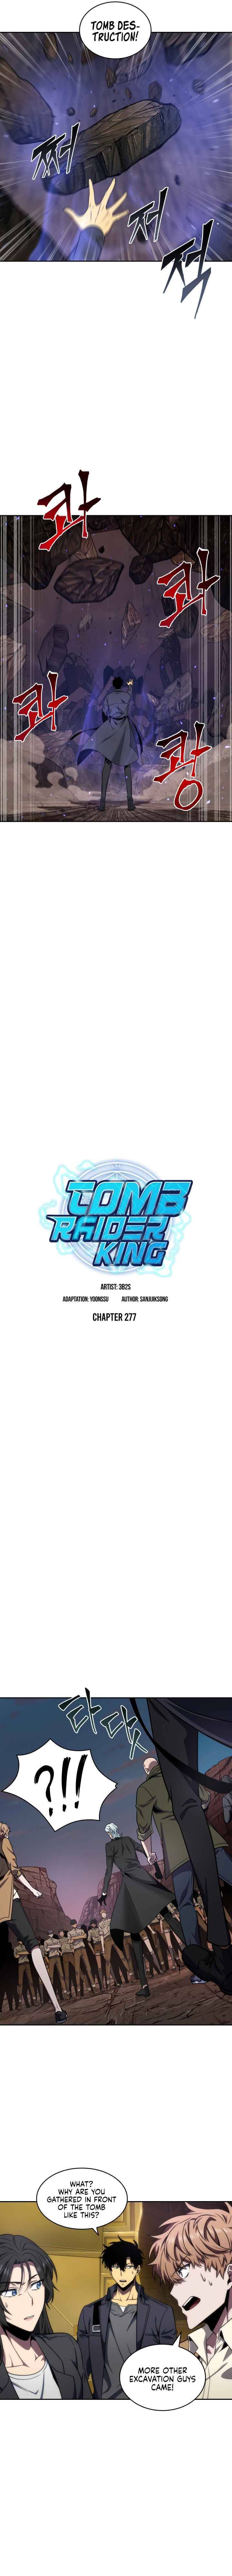 tomb_raider_king_277_2